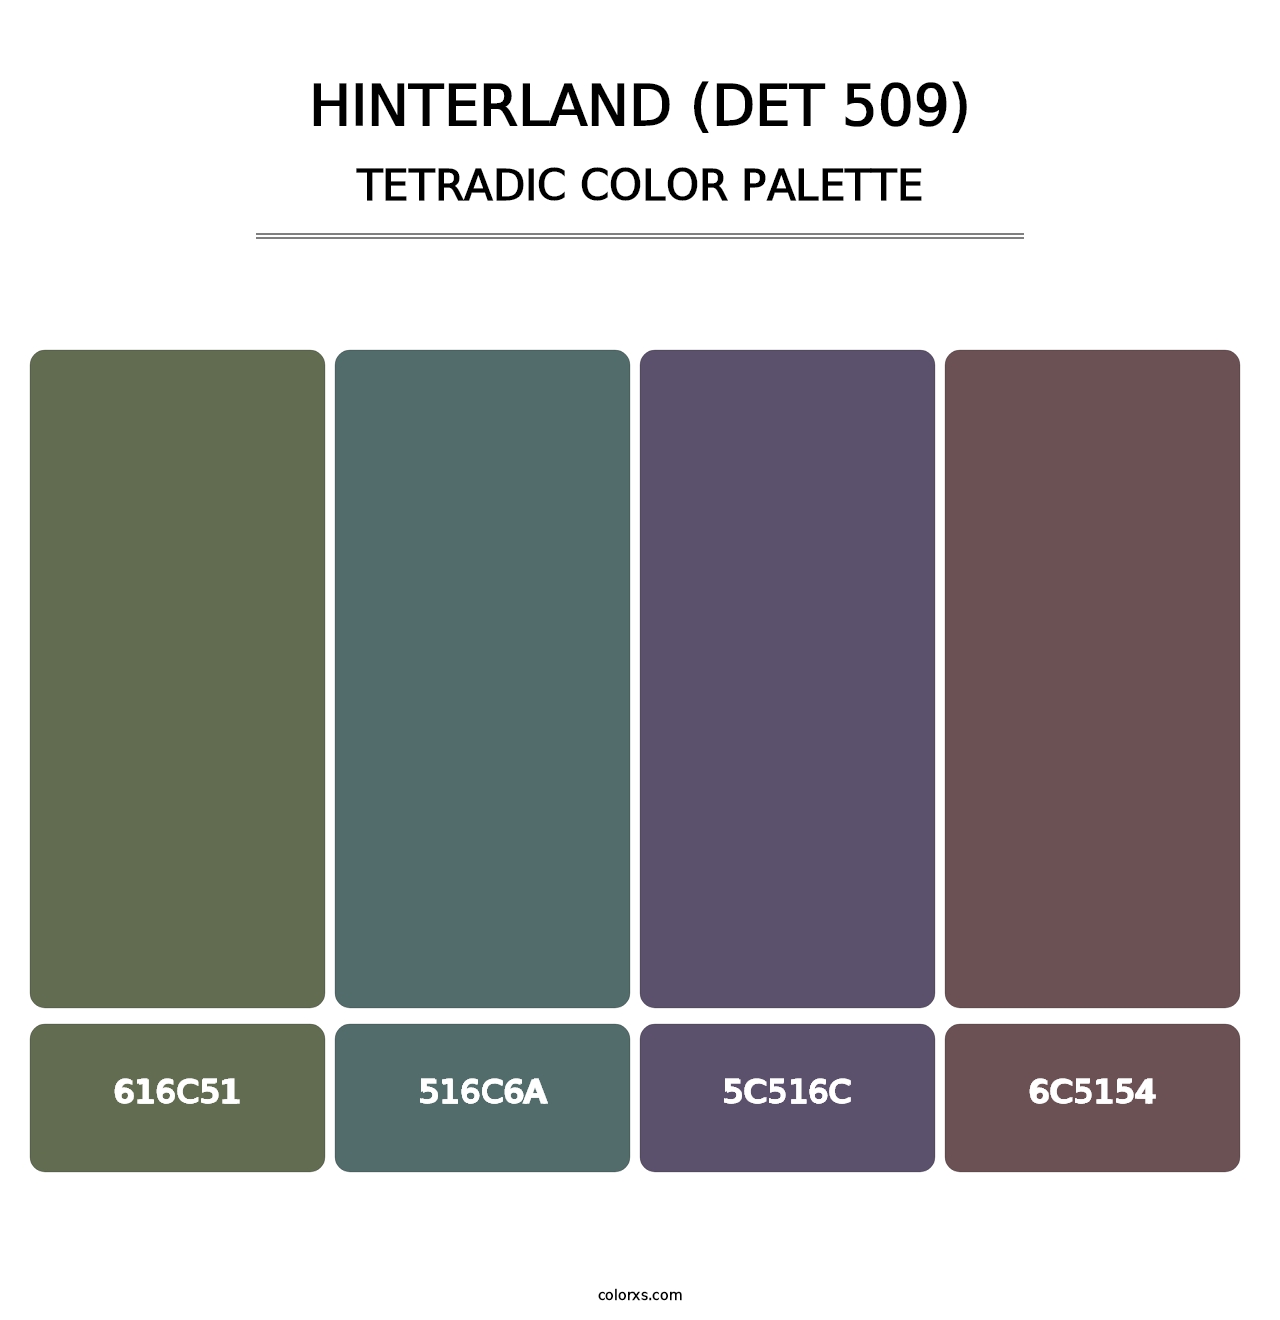 Hinterland (DET 509) - Tetradic Color Palette